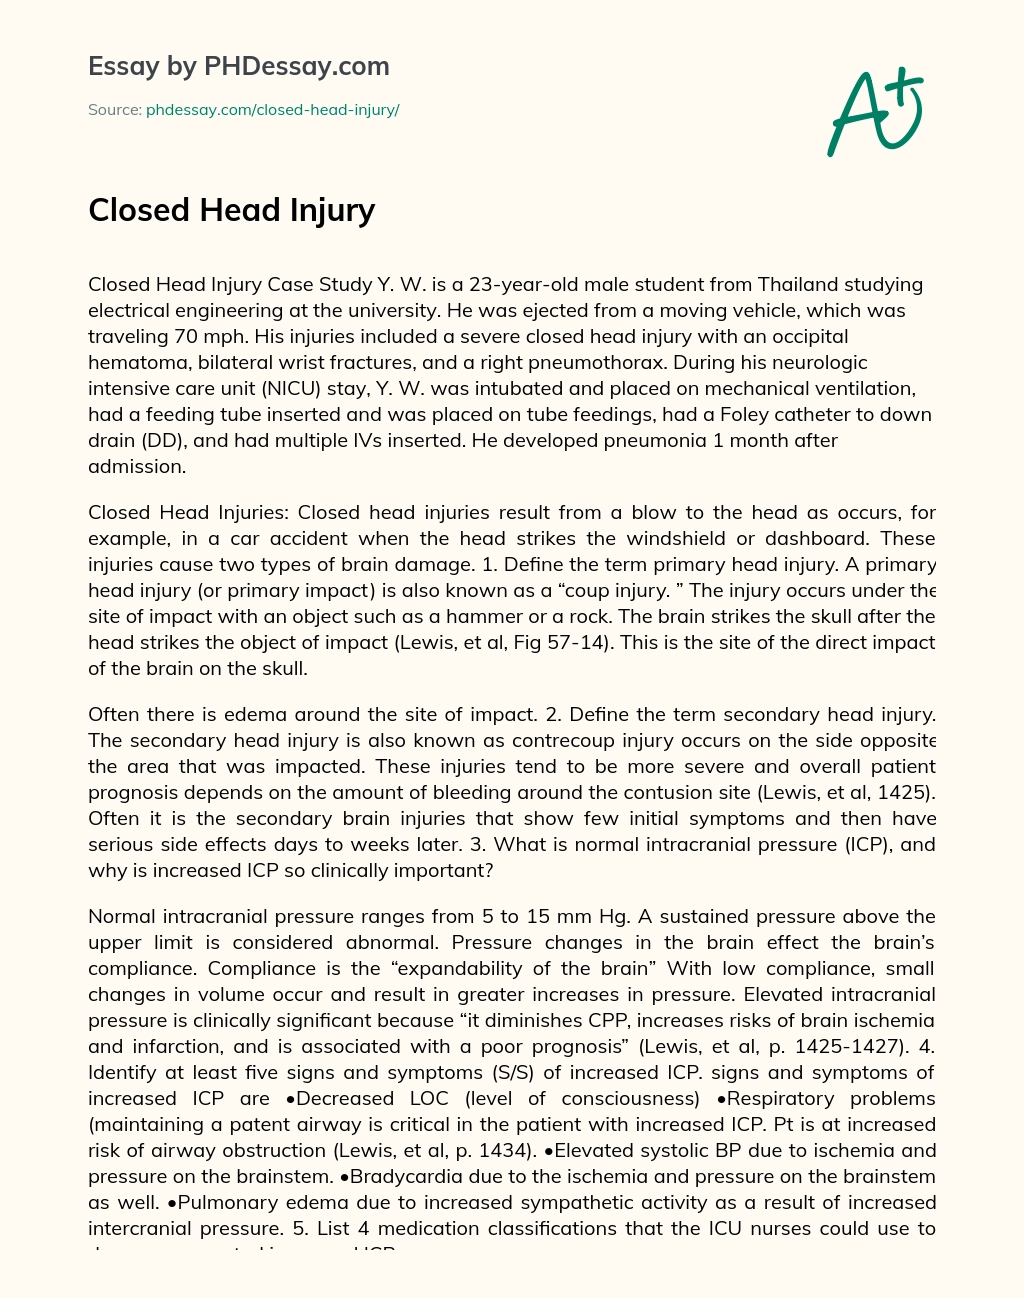 Closed Head Injury essay